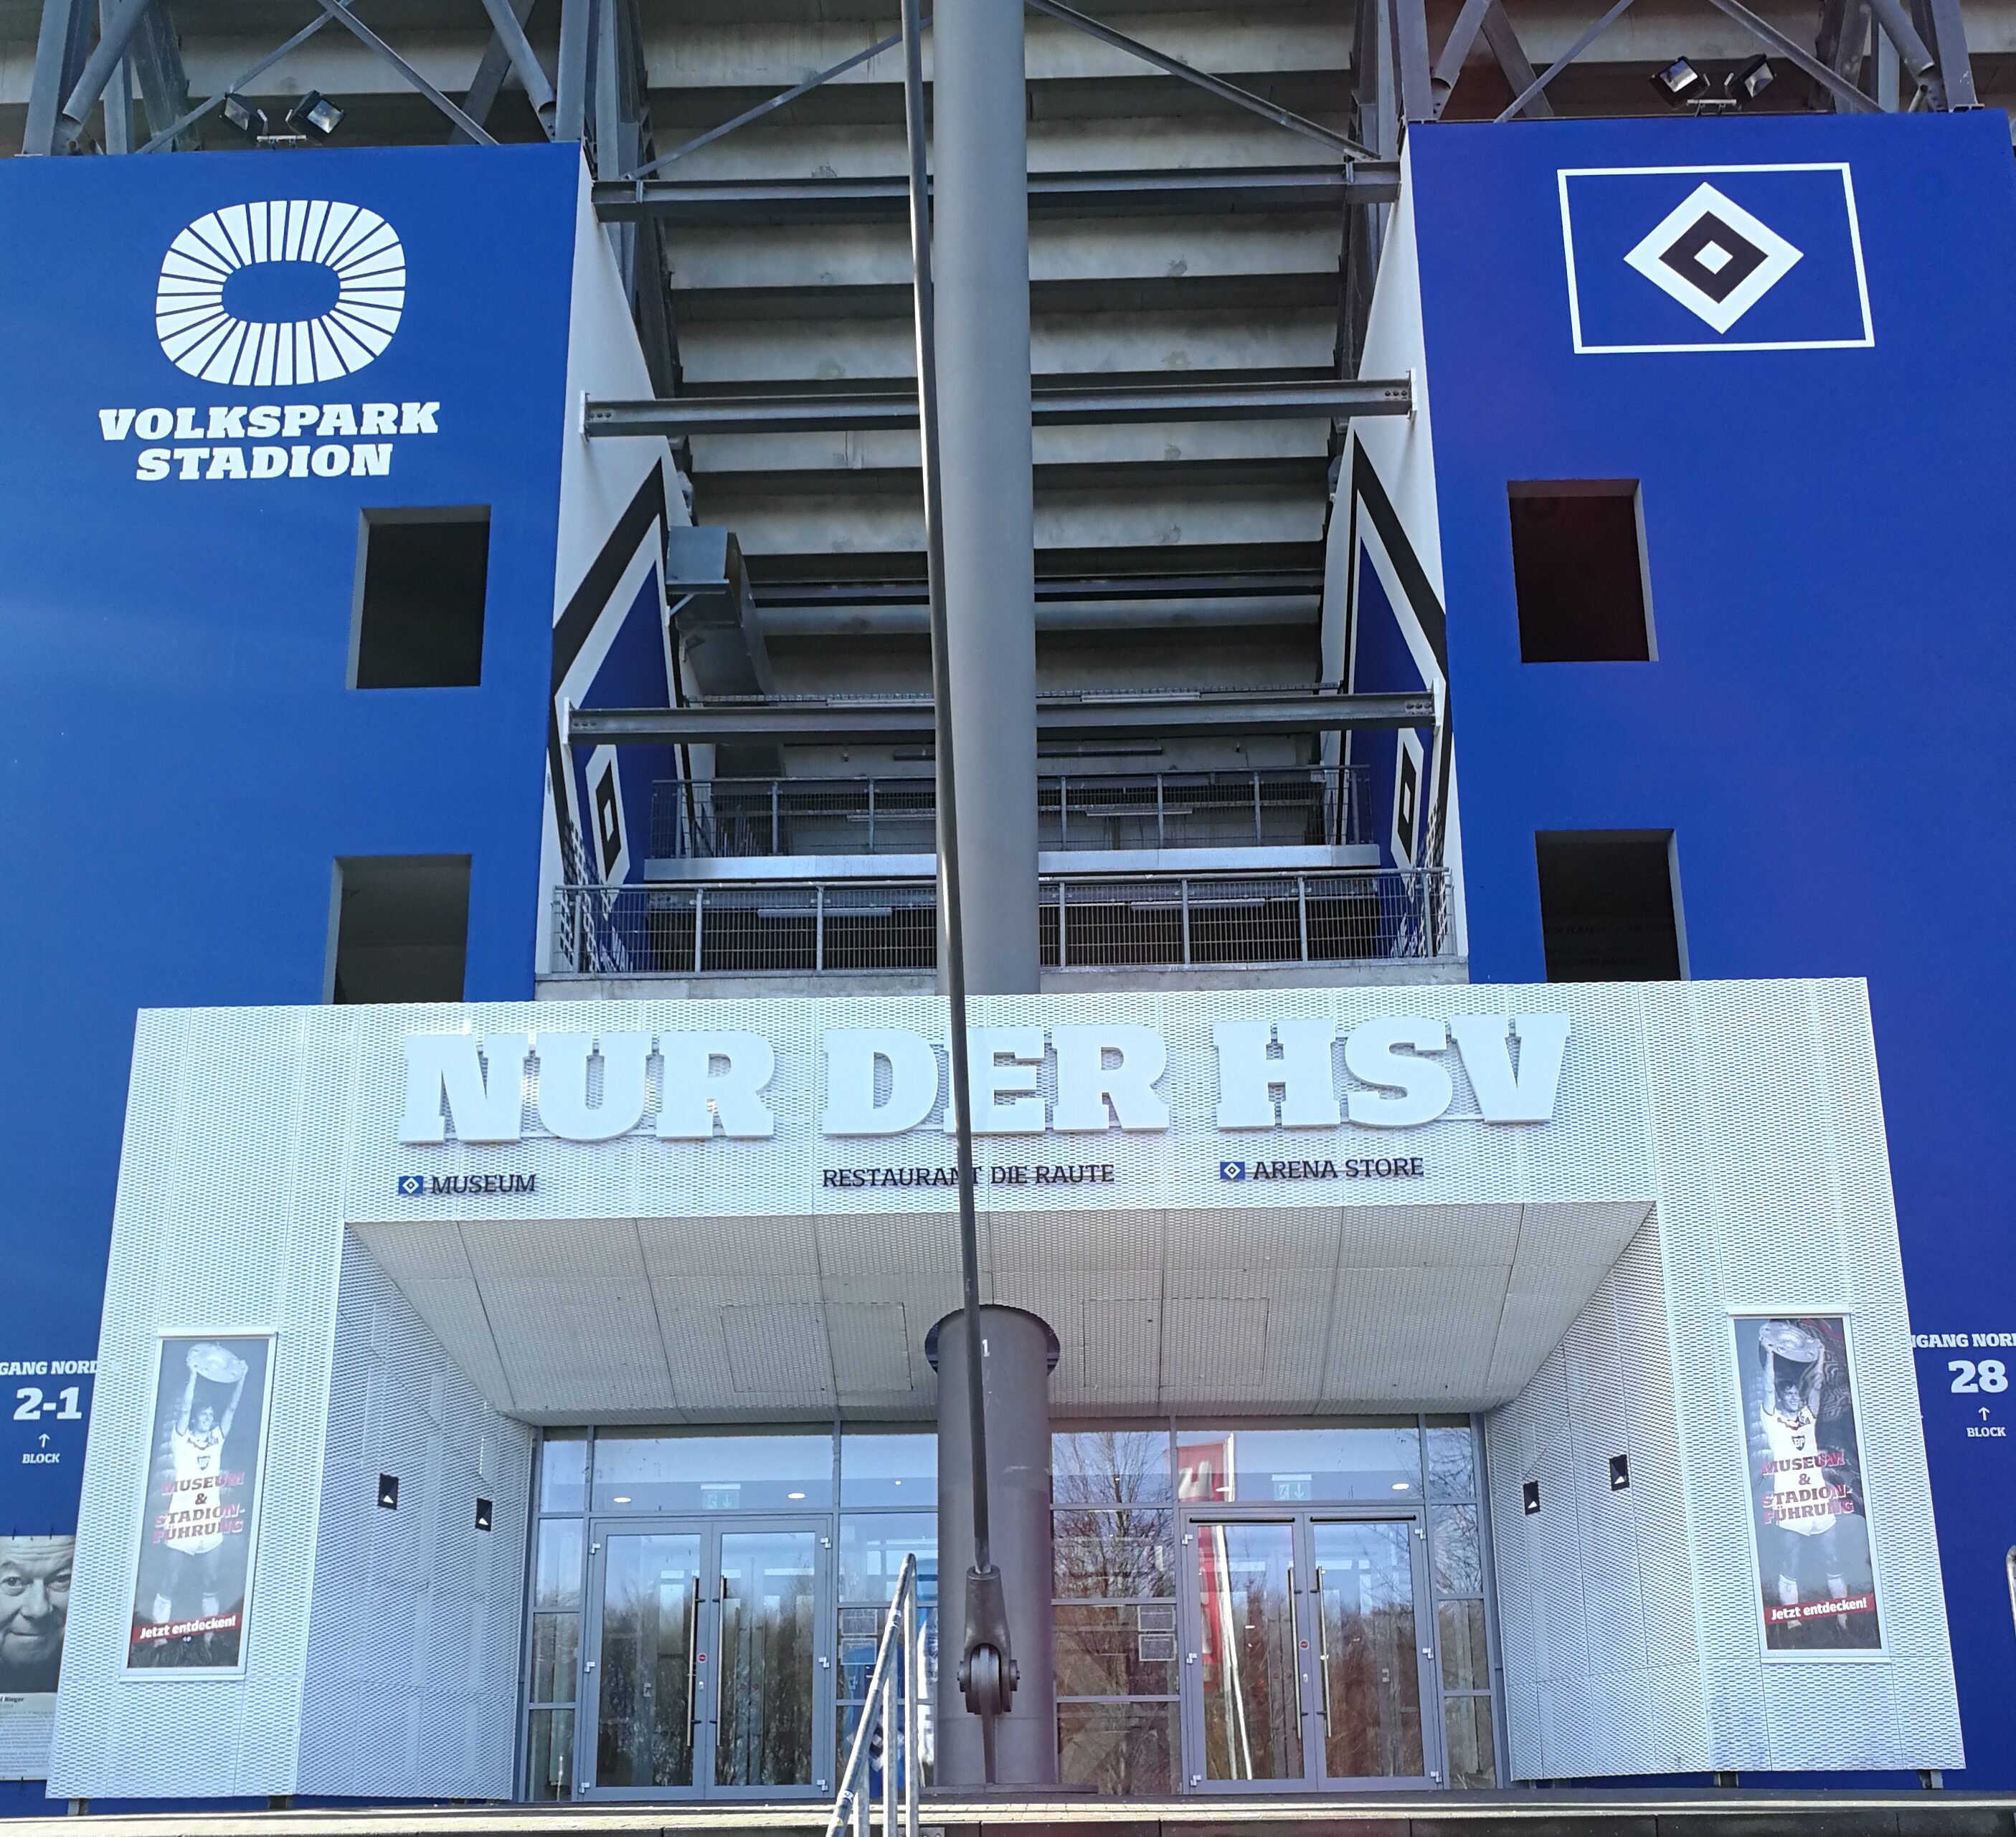 HSV, Hamburger SV